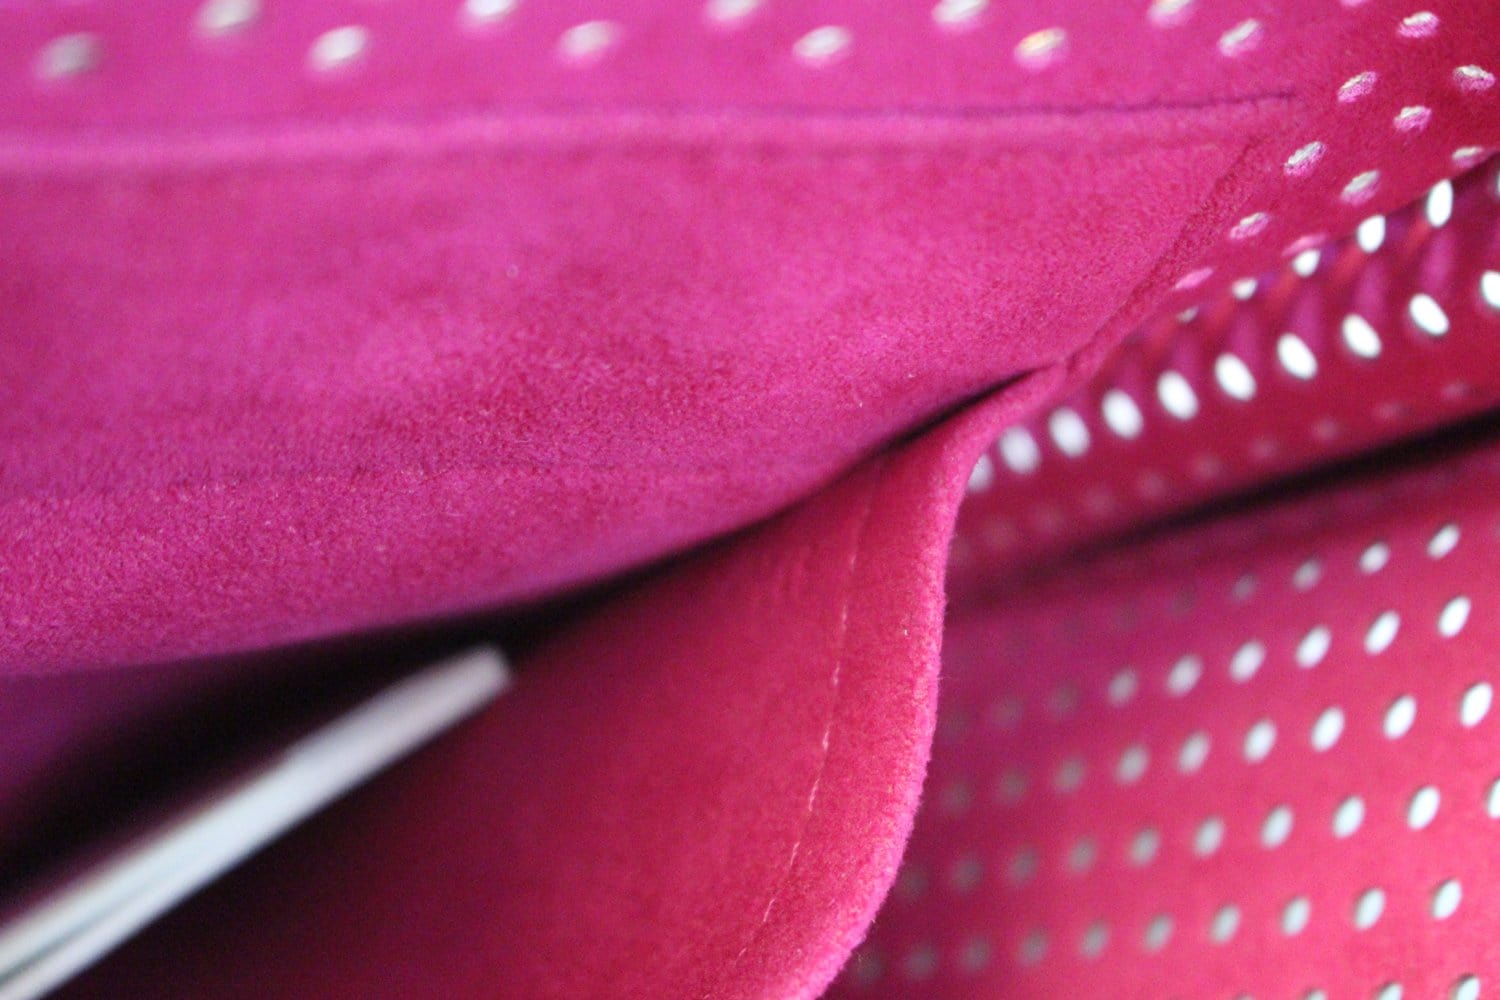 LOUIS VUITTON Monogram Perfo Musette Shoulder Bag Fuchsia Pink M95172 LV  bs3689